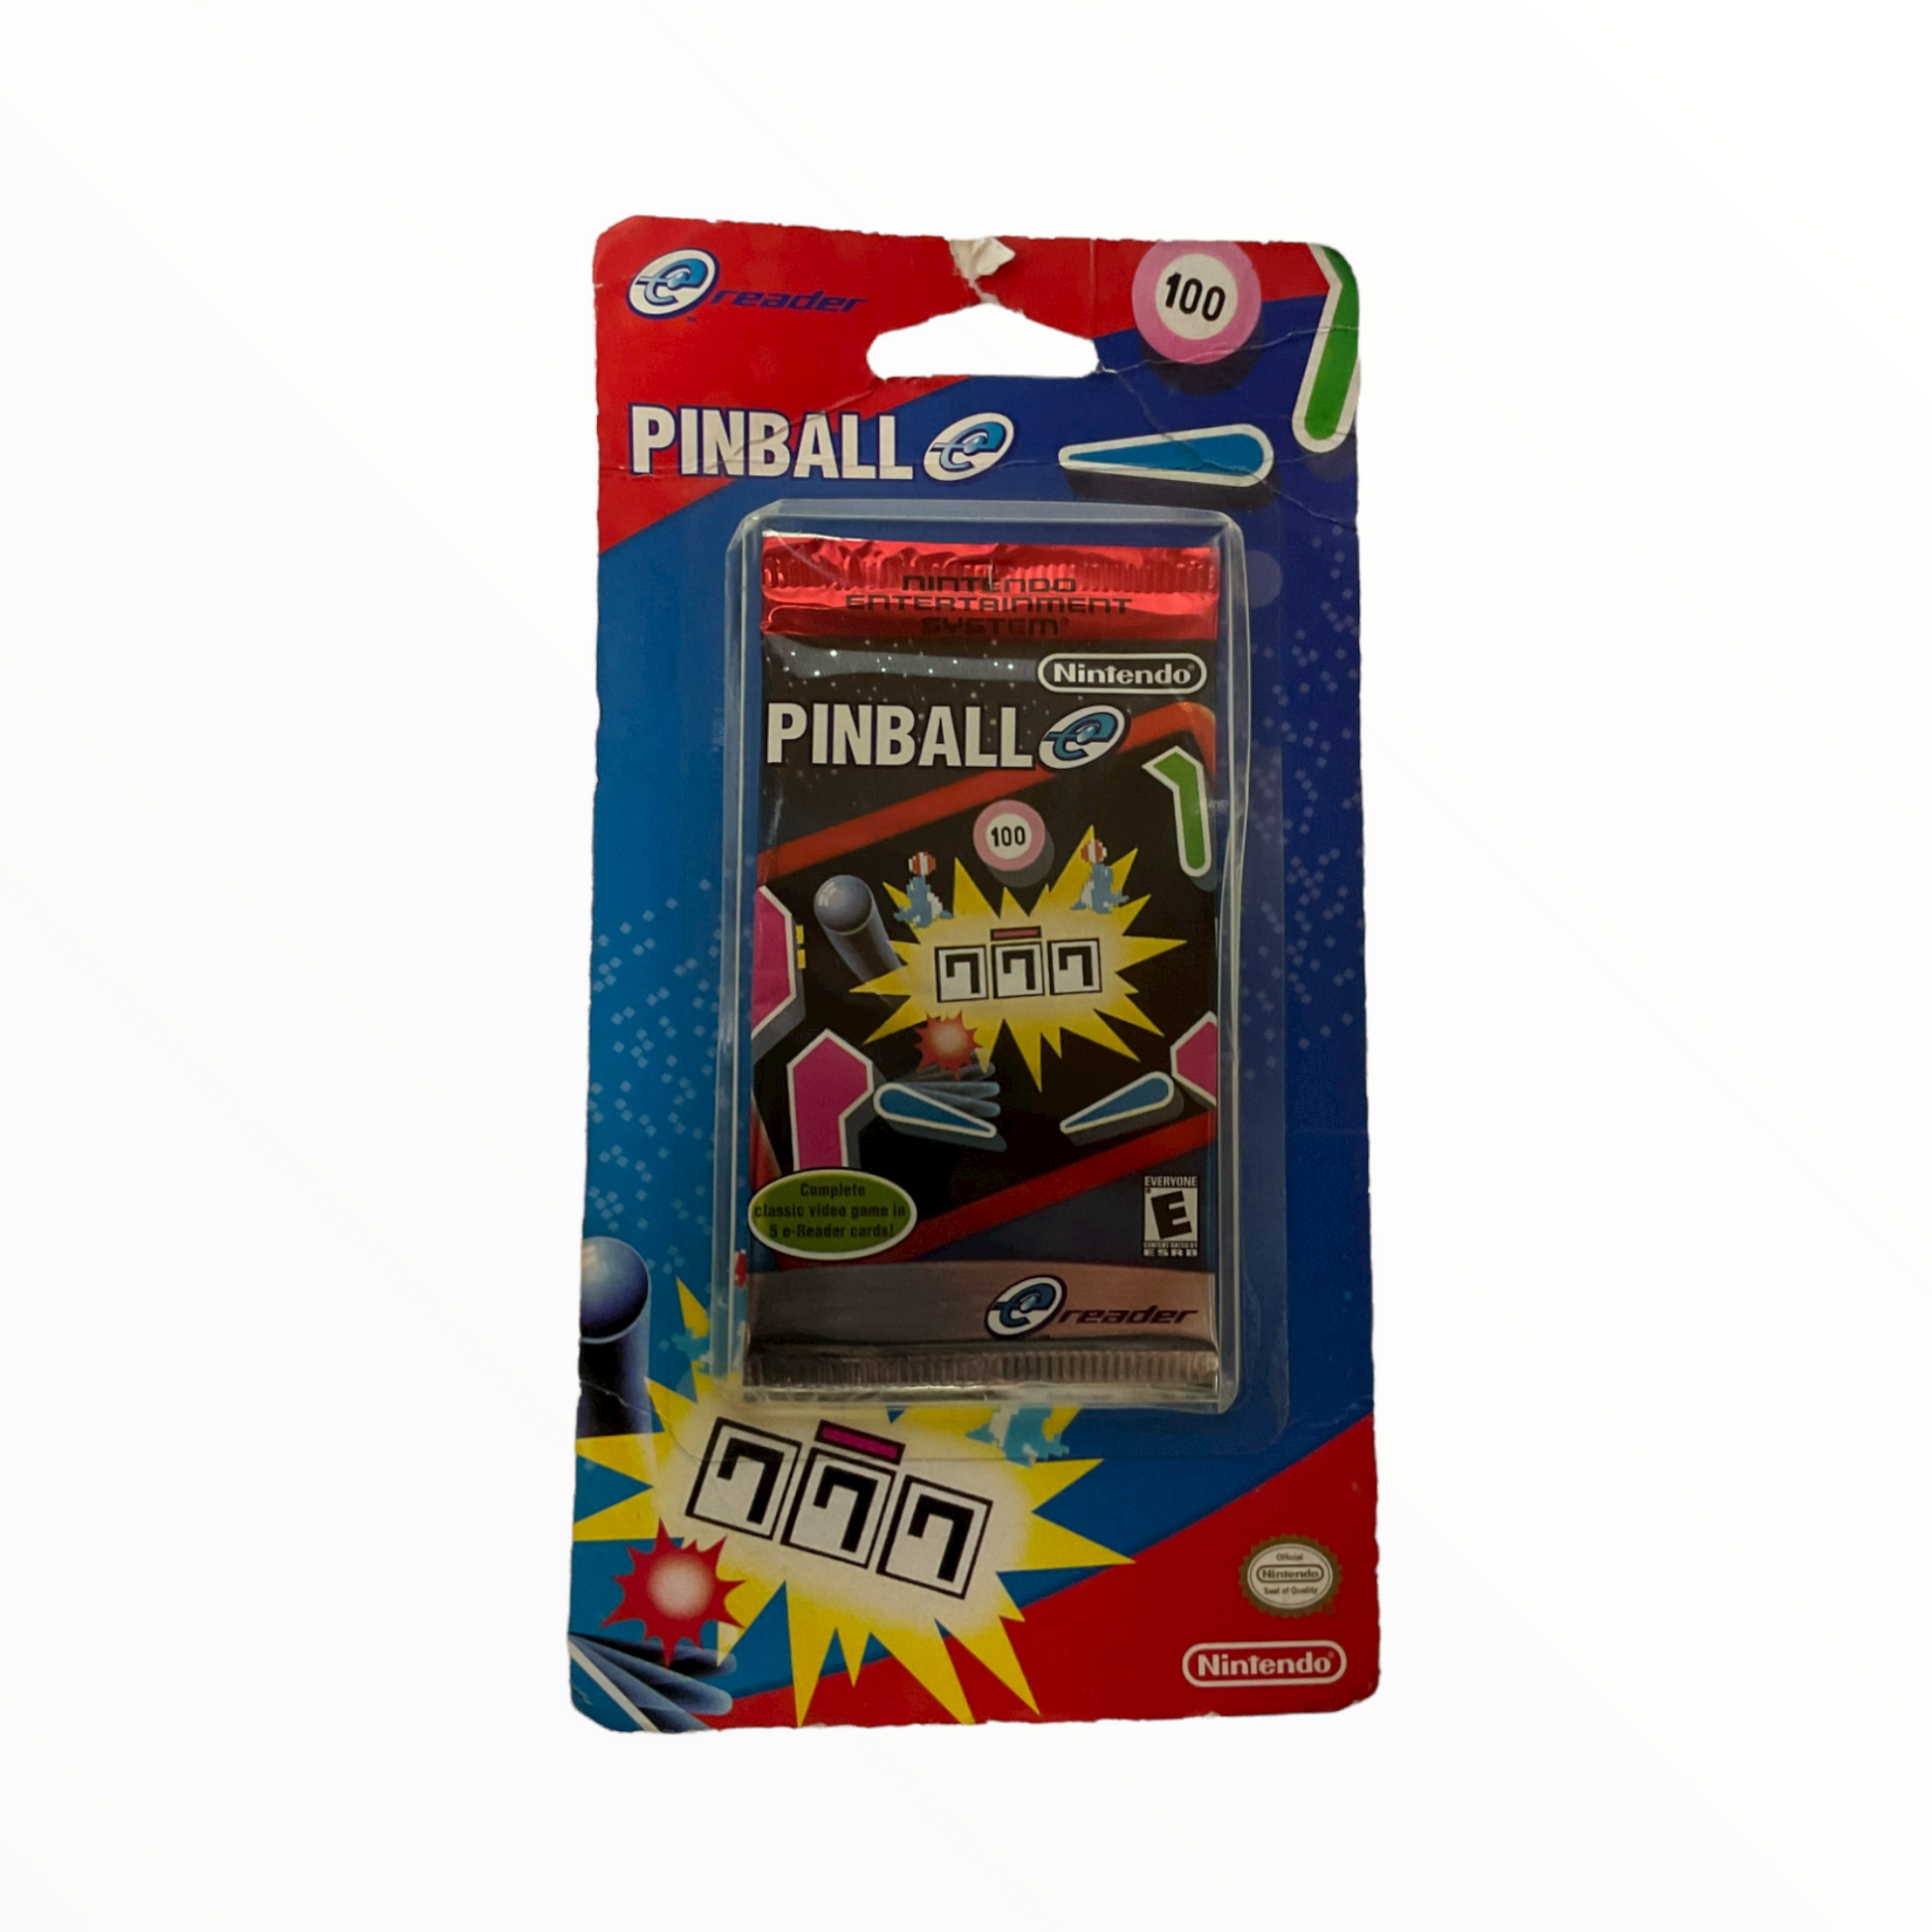 E-reader Pinball - Game Boy Advance